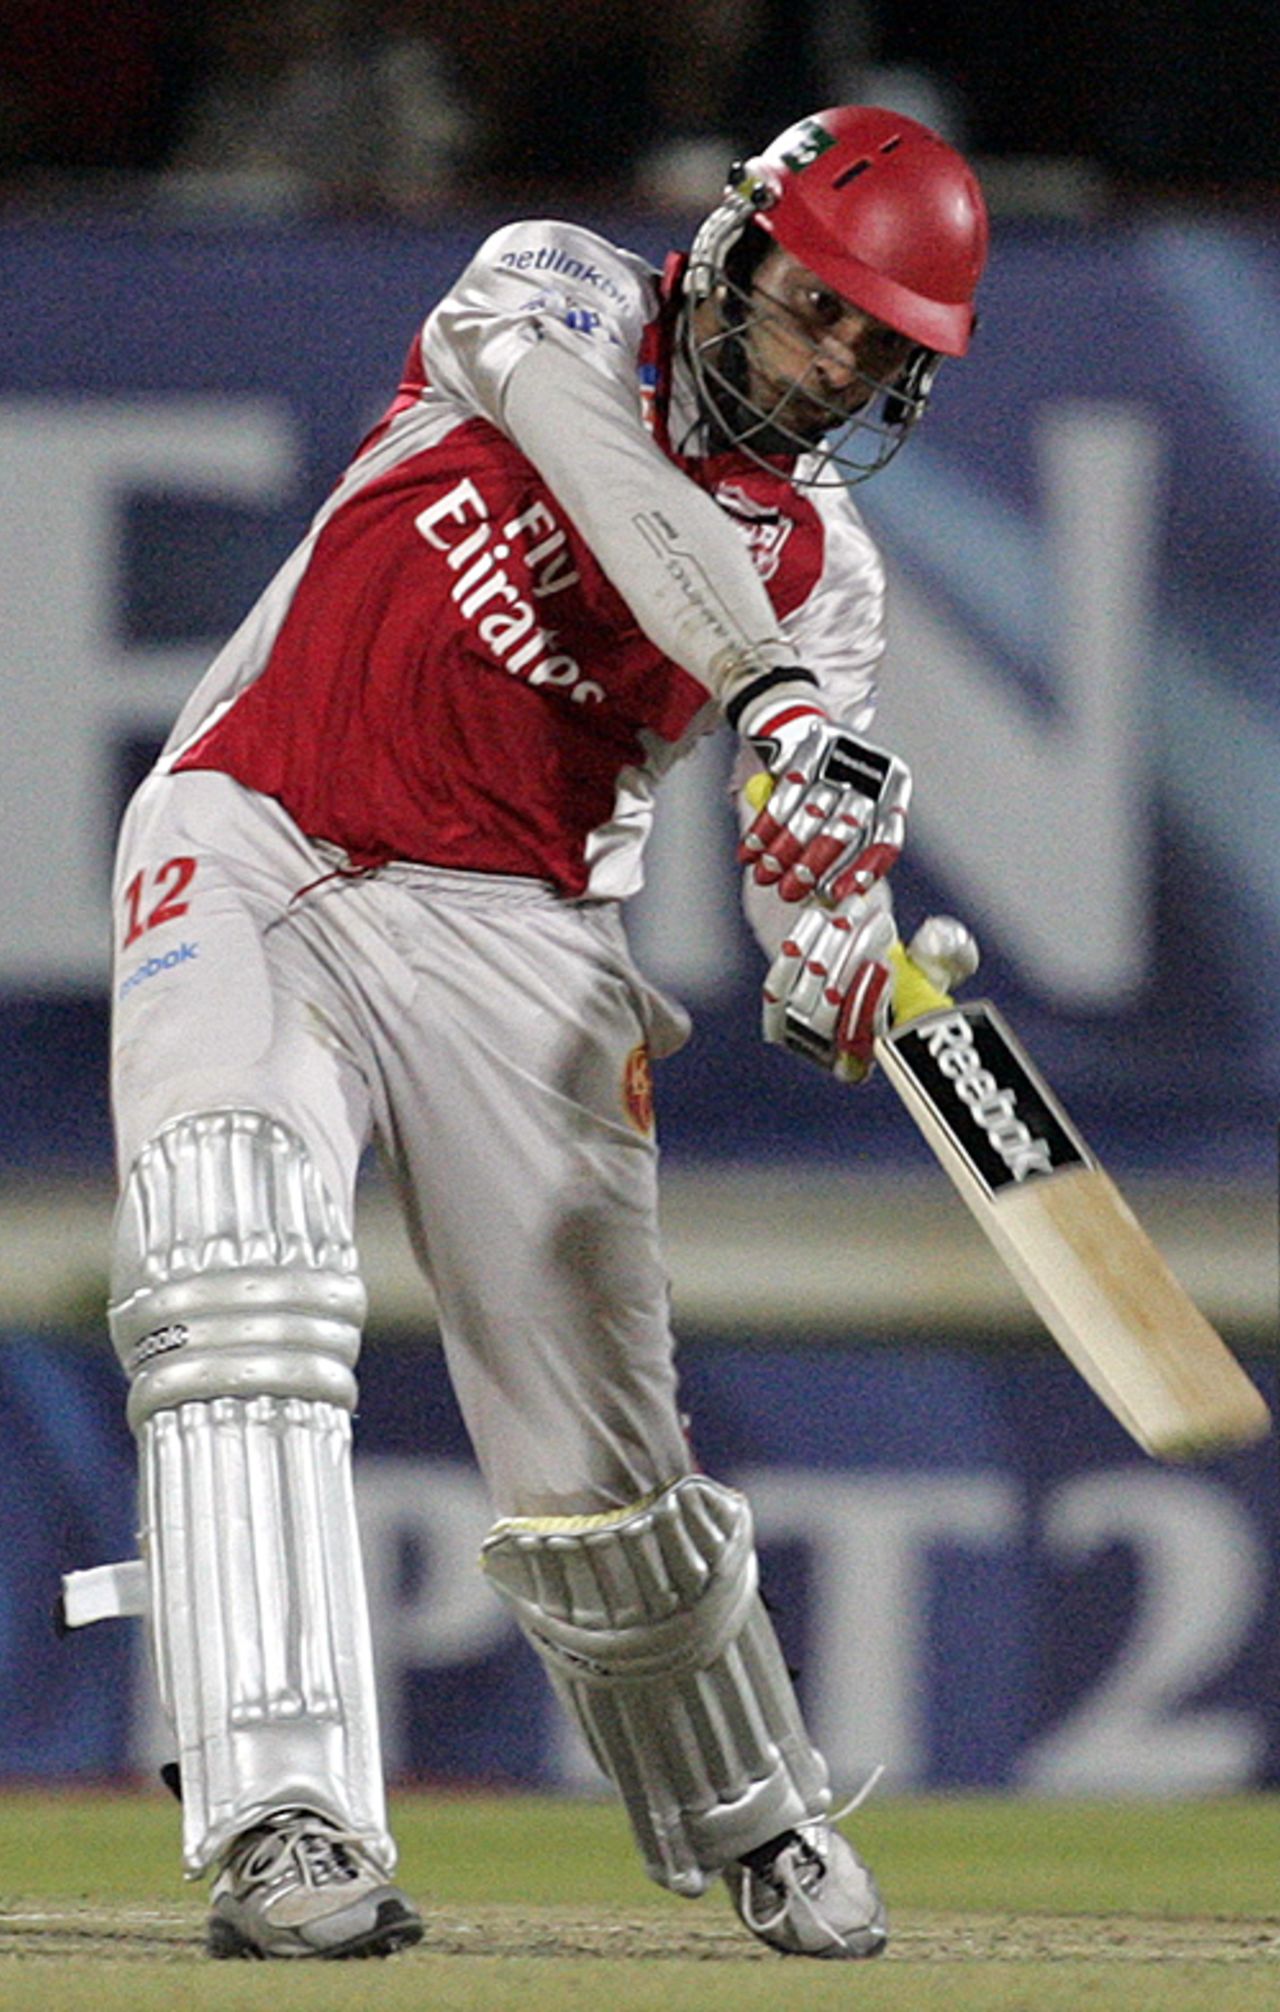 Yuvraj Singh switches gears, Delhi Daredevils v Kings XI Punjab, 46th match, IPL, Bloemfontein, May 15, 2009